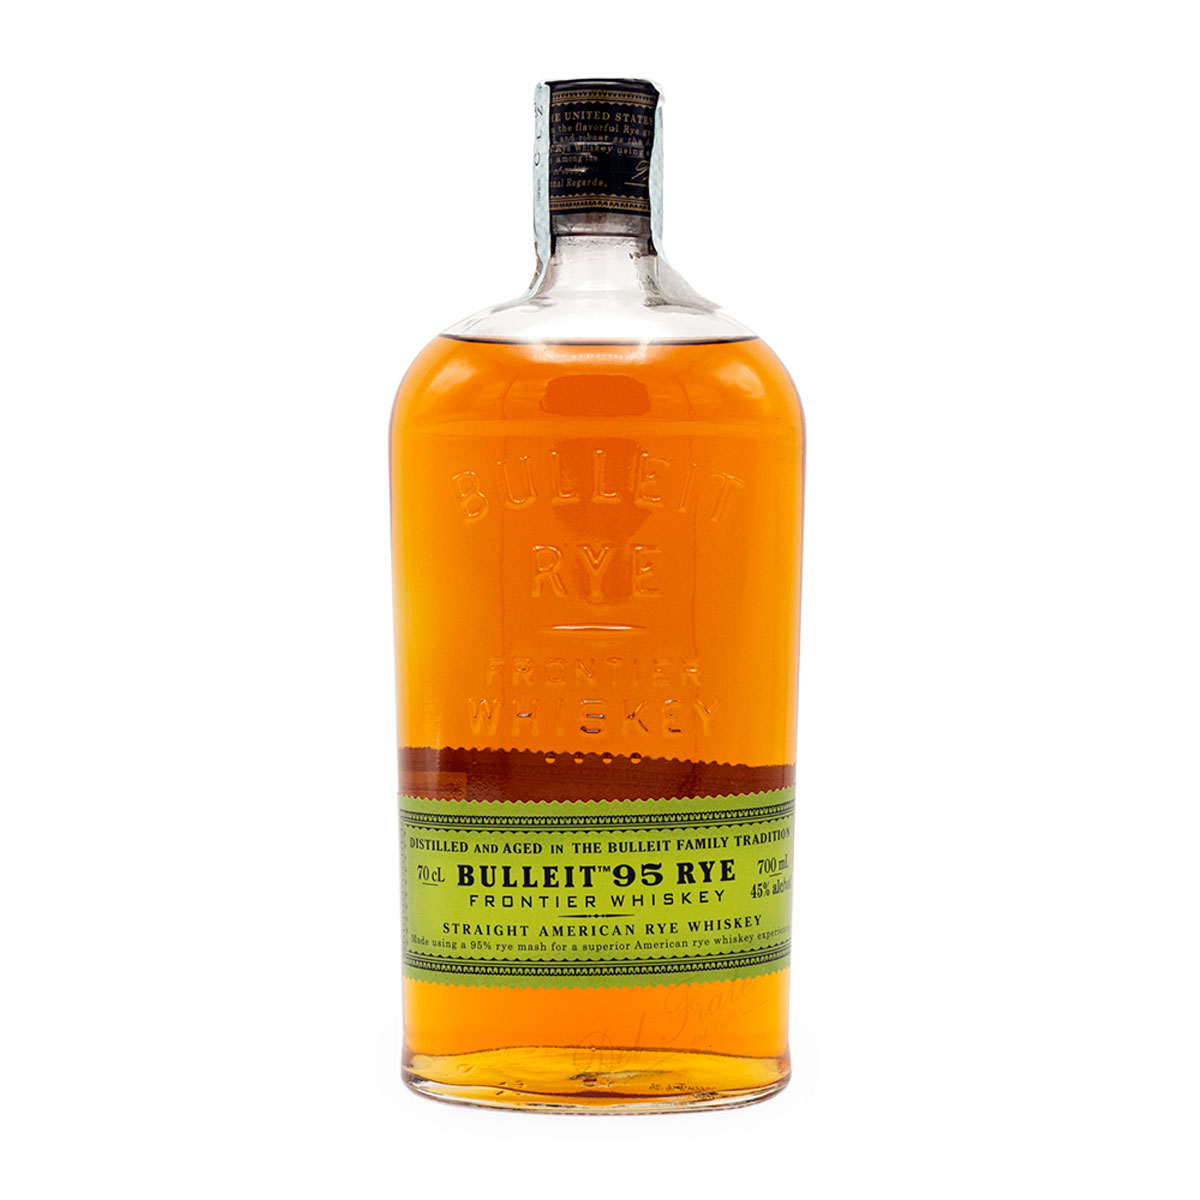 a bottle of bulleit rye whisky